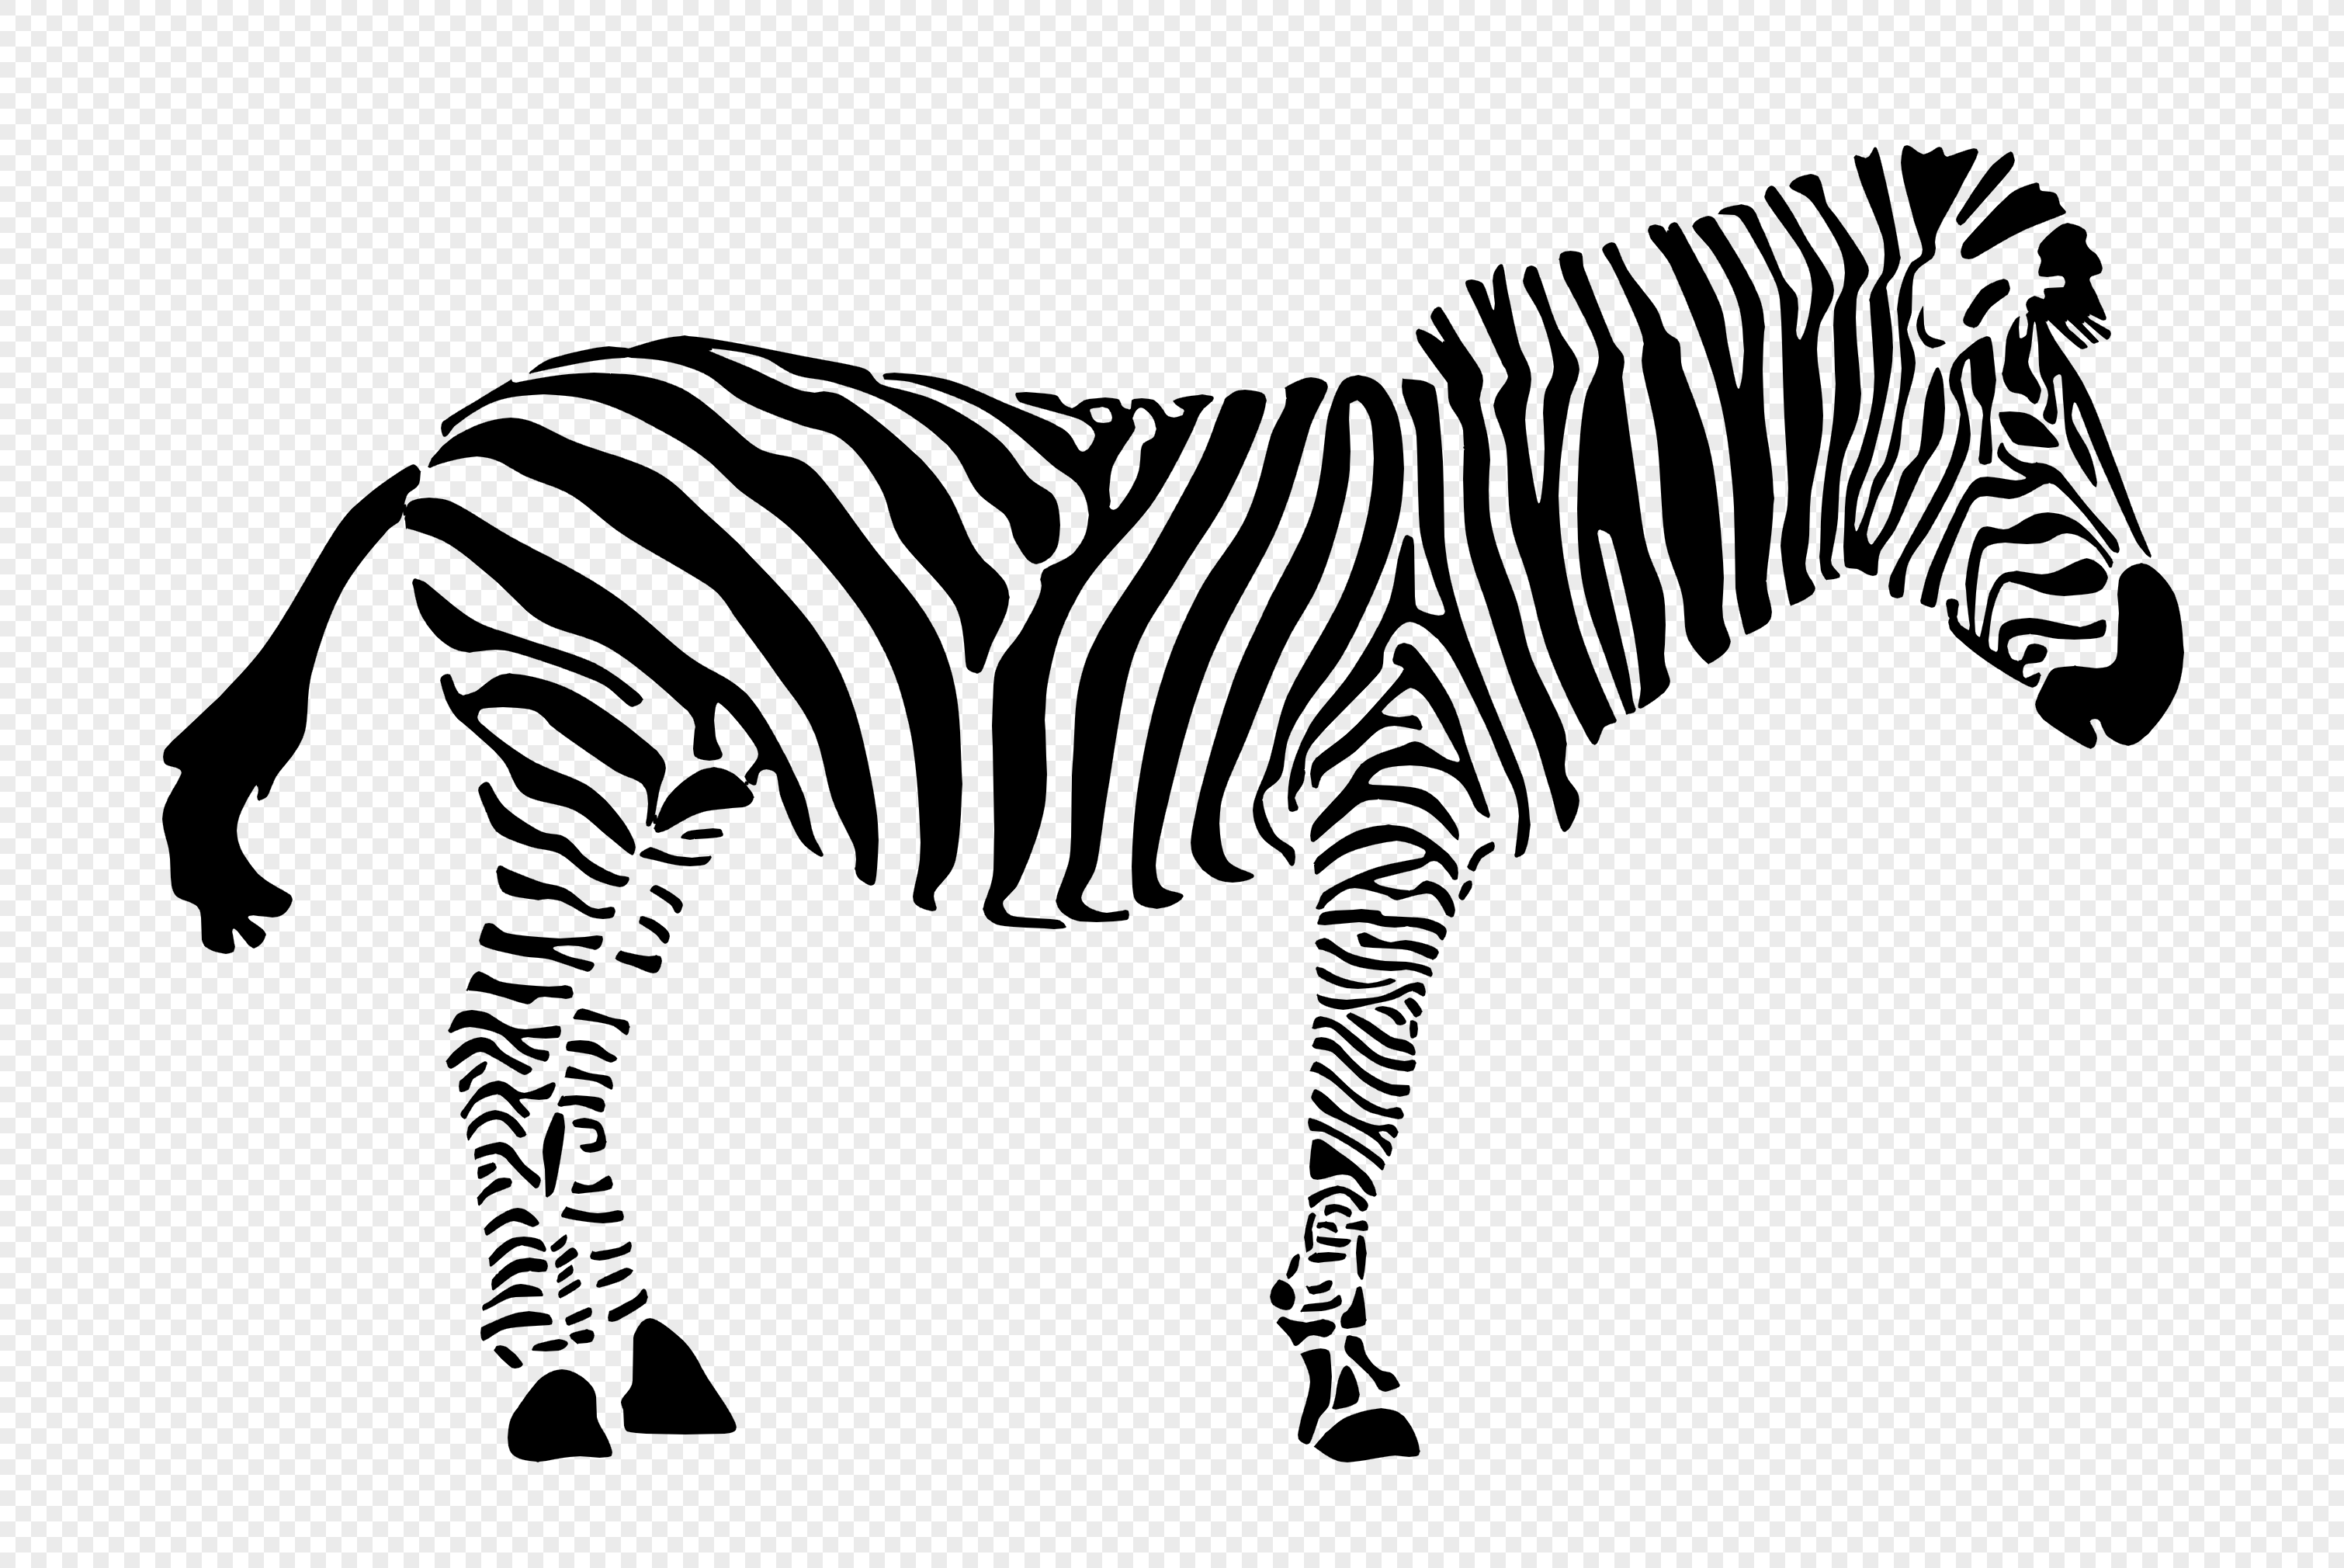 Abstract hand drawn line art zebra clipart Safari animals clipart African  animals clipart Commercial use Papercraft Scrapbooking Craft Supplies &  Tools 